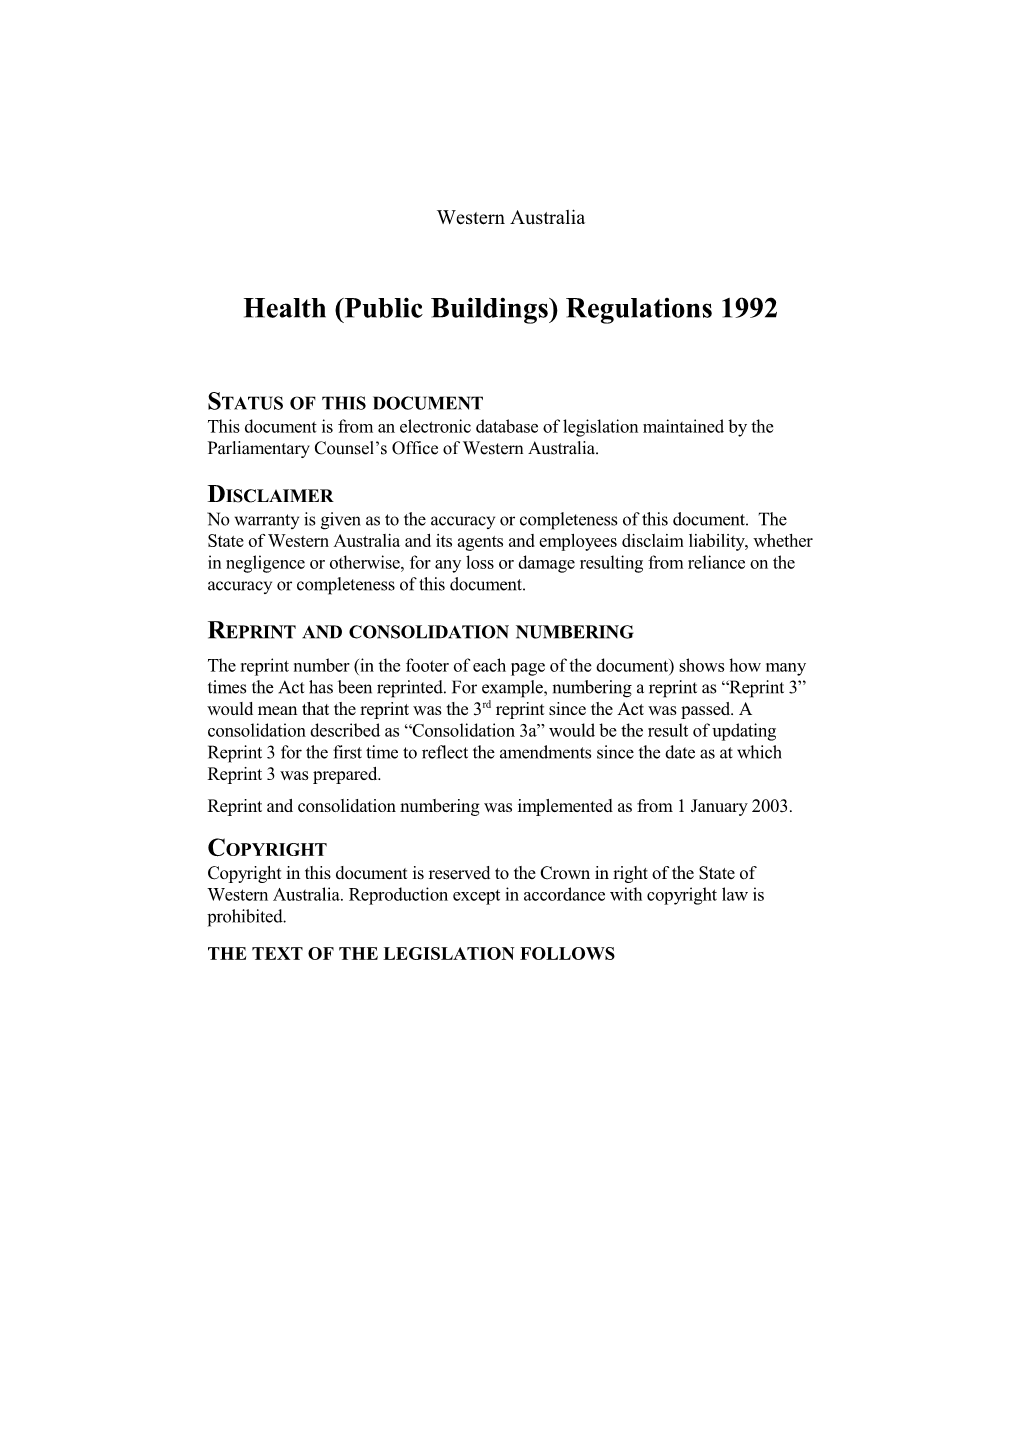 Health (Public Buildings) Regulations 1992